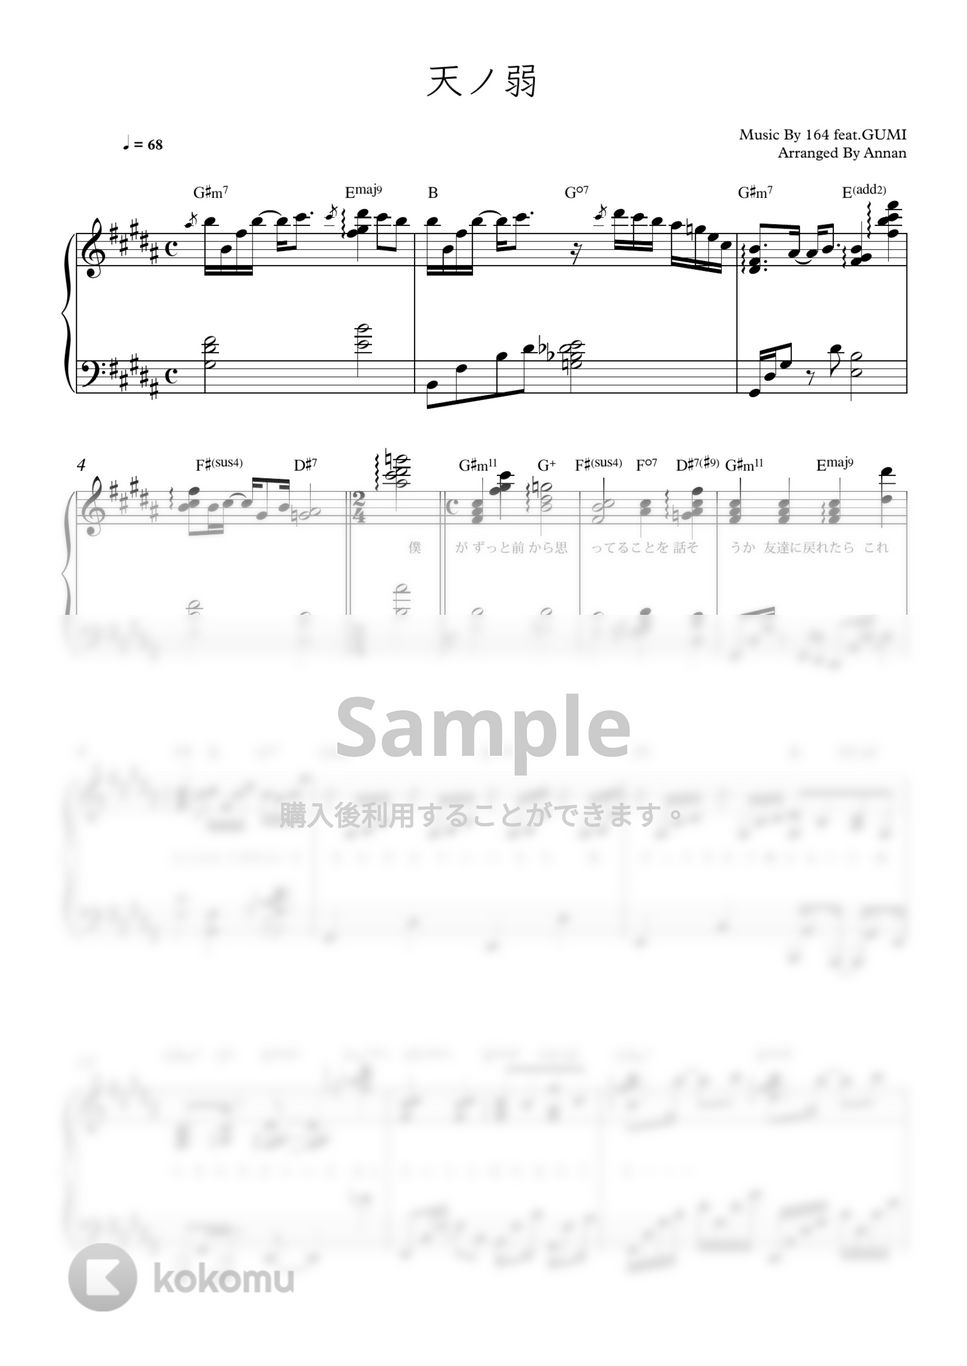 164 feat.GUMI - 天ノ弱 (ピアノ伴奏ver. / 歌詞付き) by Annan